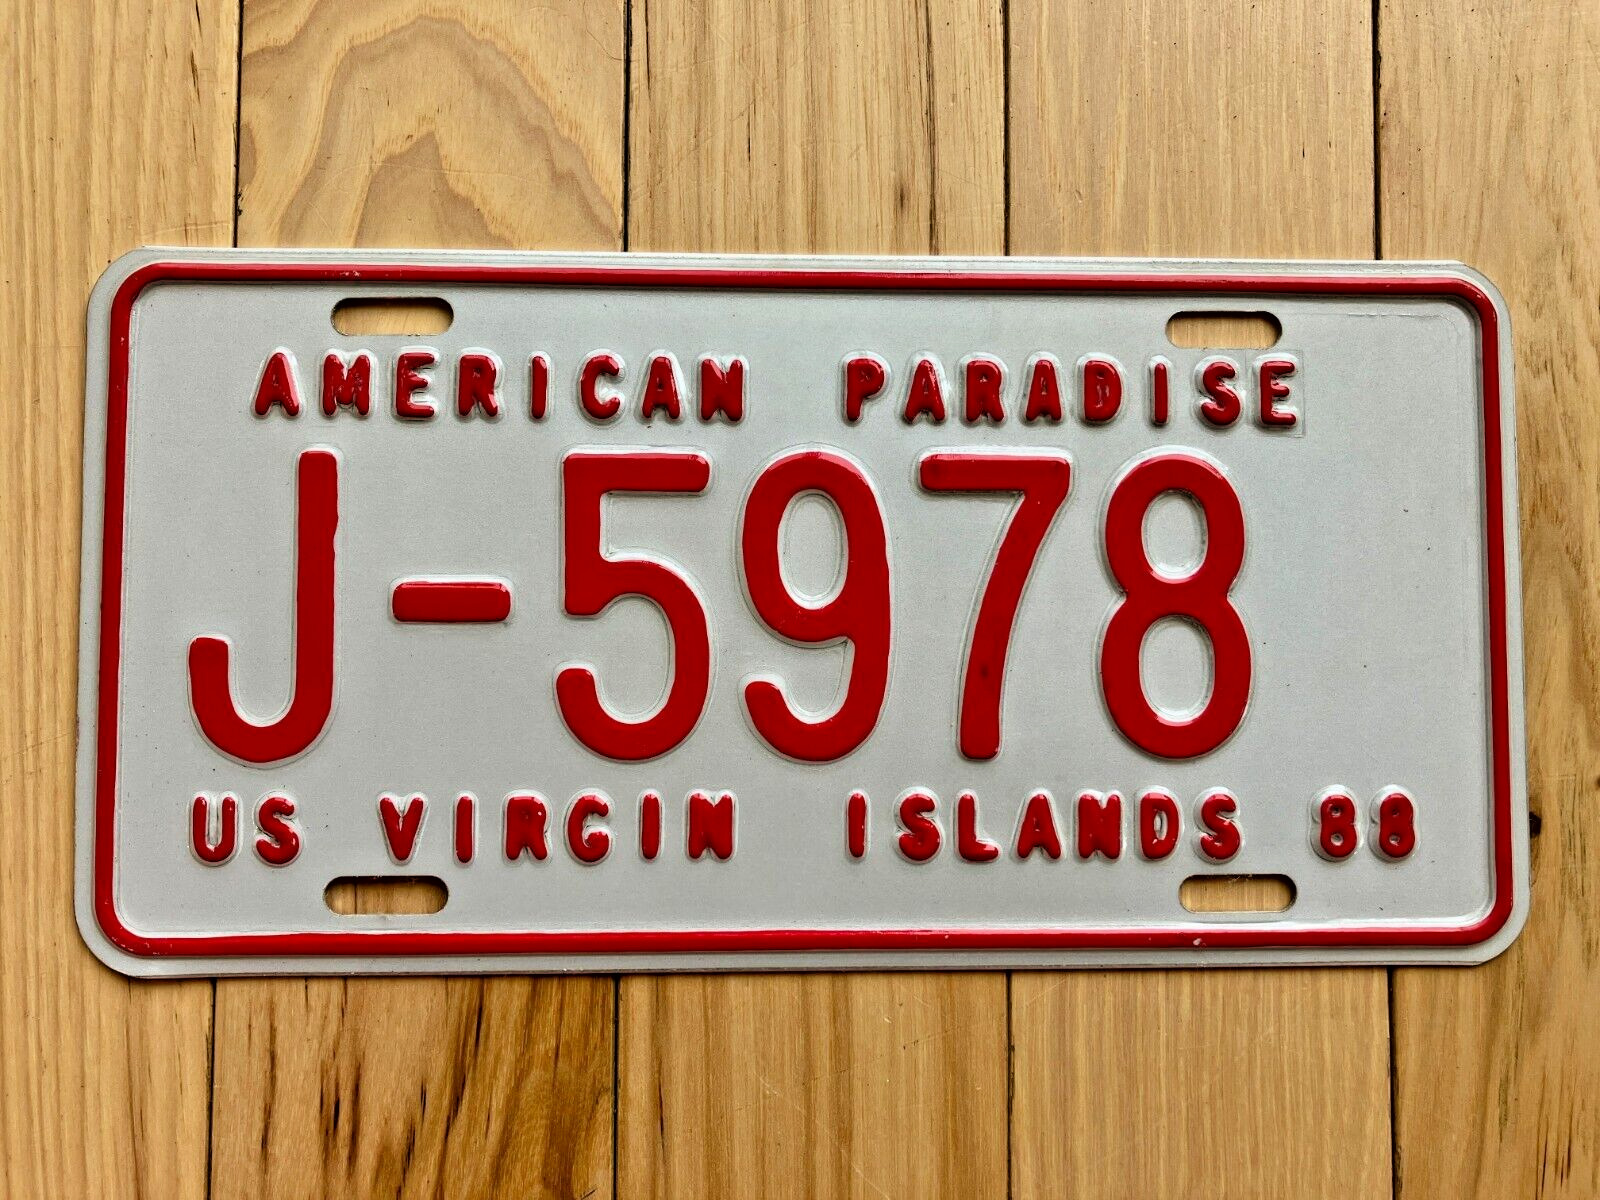 1988 US Virgin Islands (USVI) License Plate